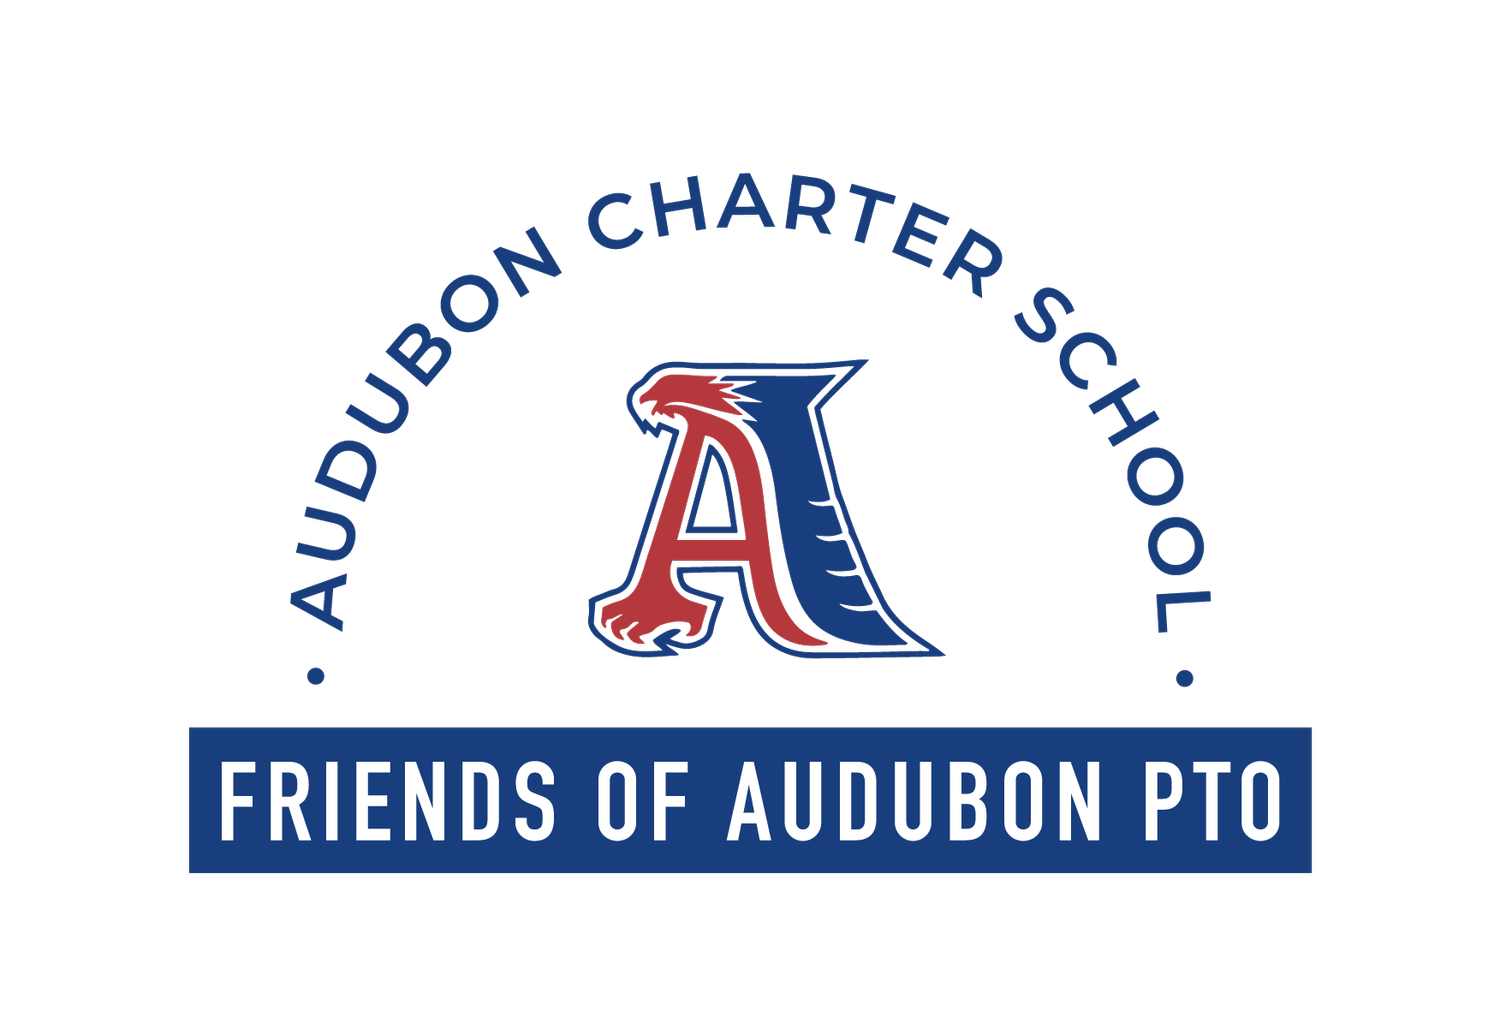 Friends of Audubon PTO